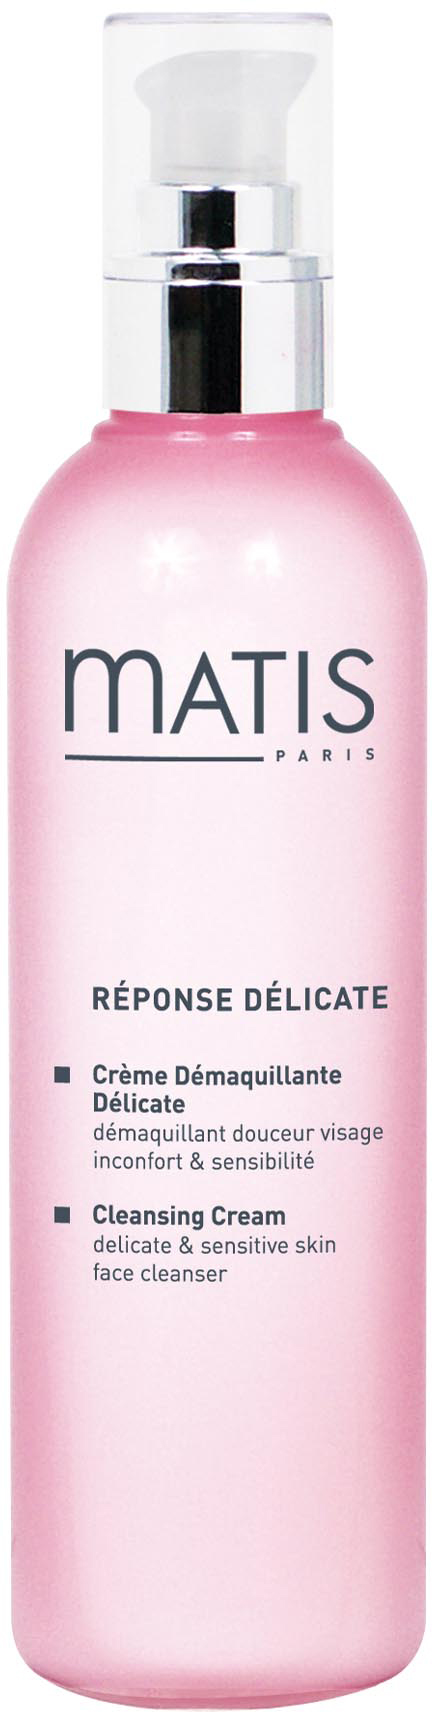 Matis Délicate Cleansing Cream 200ml